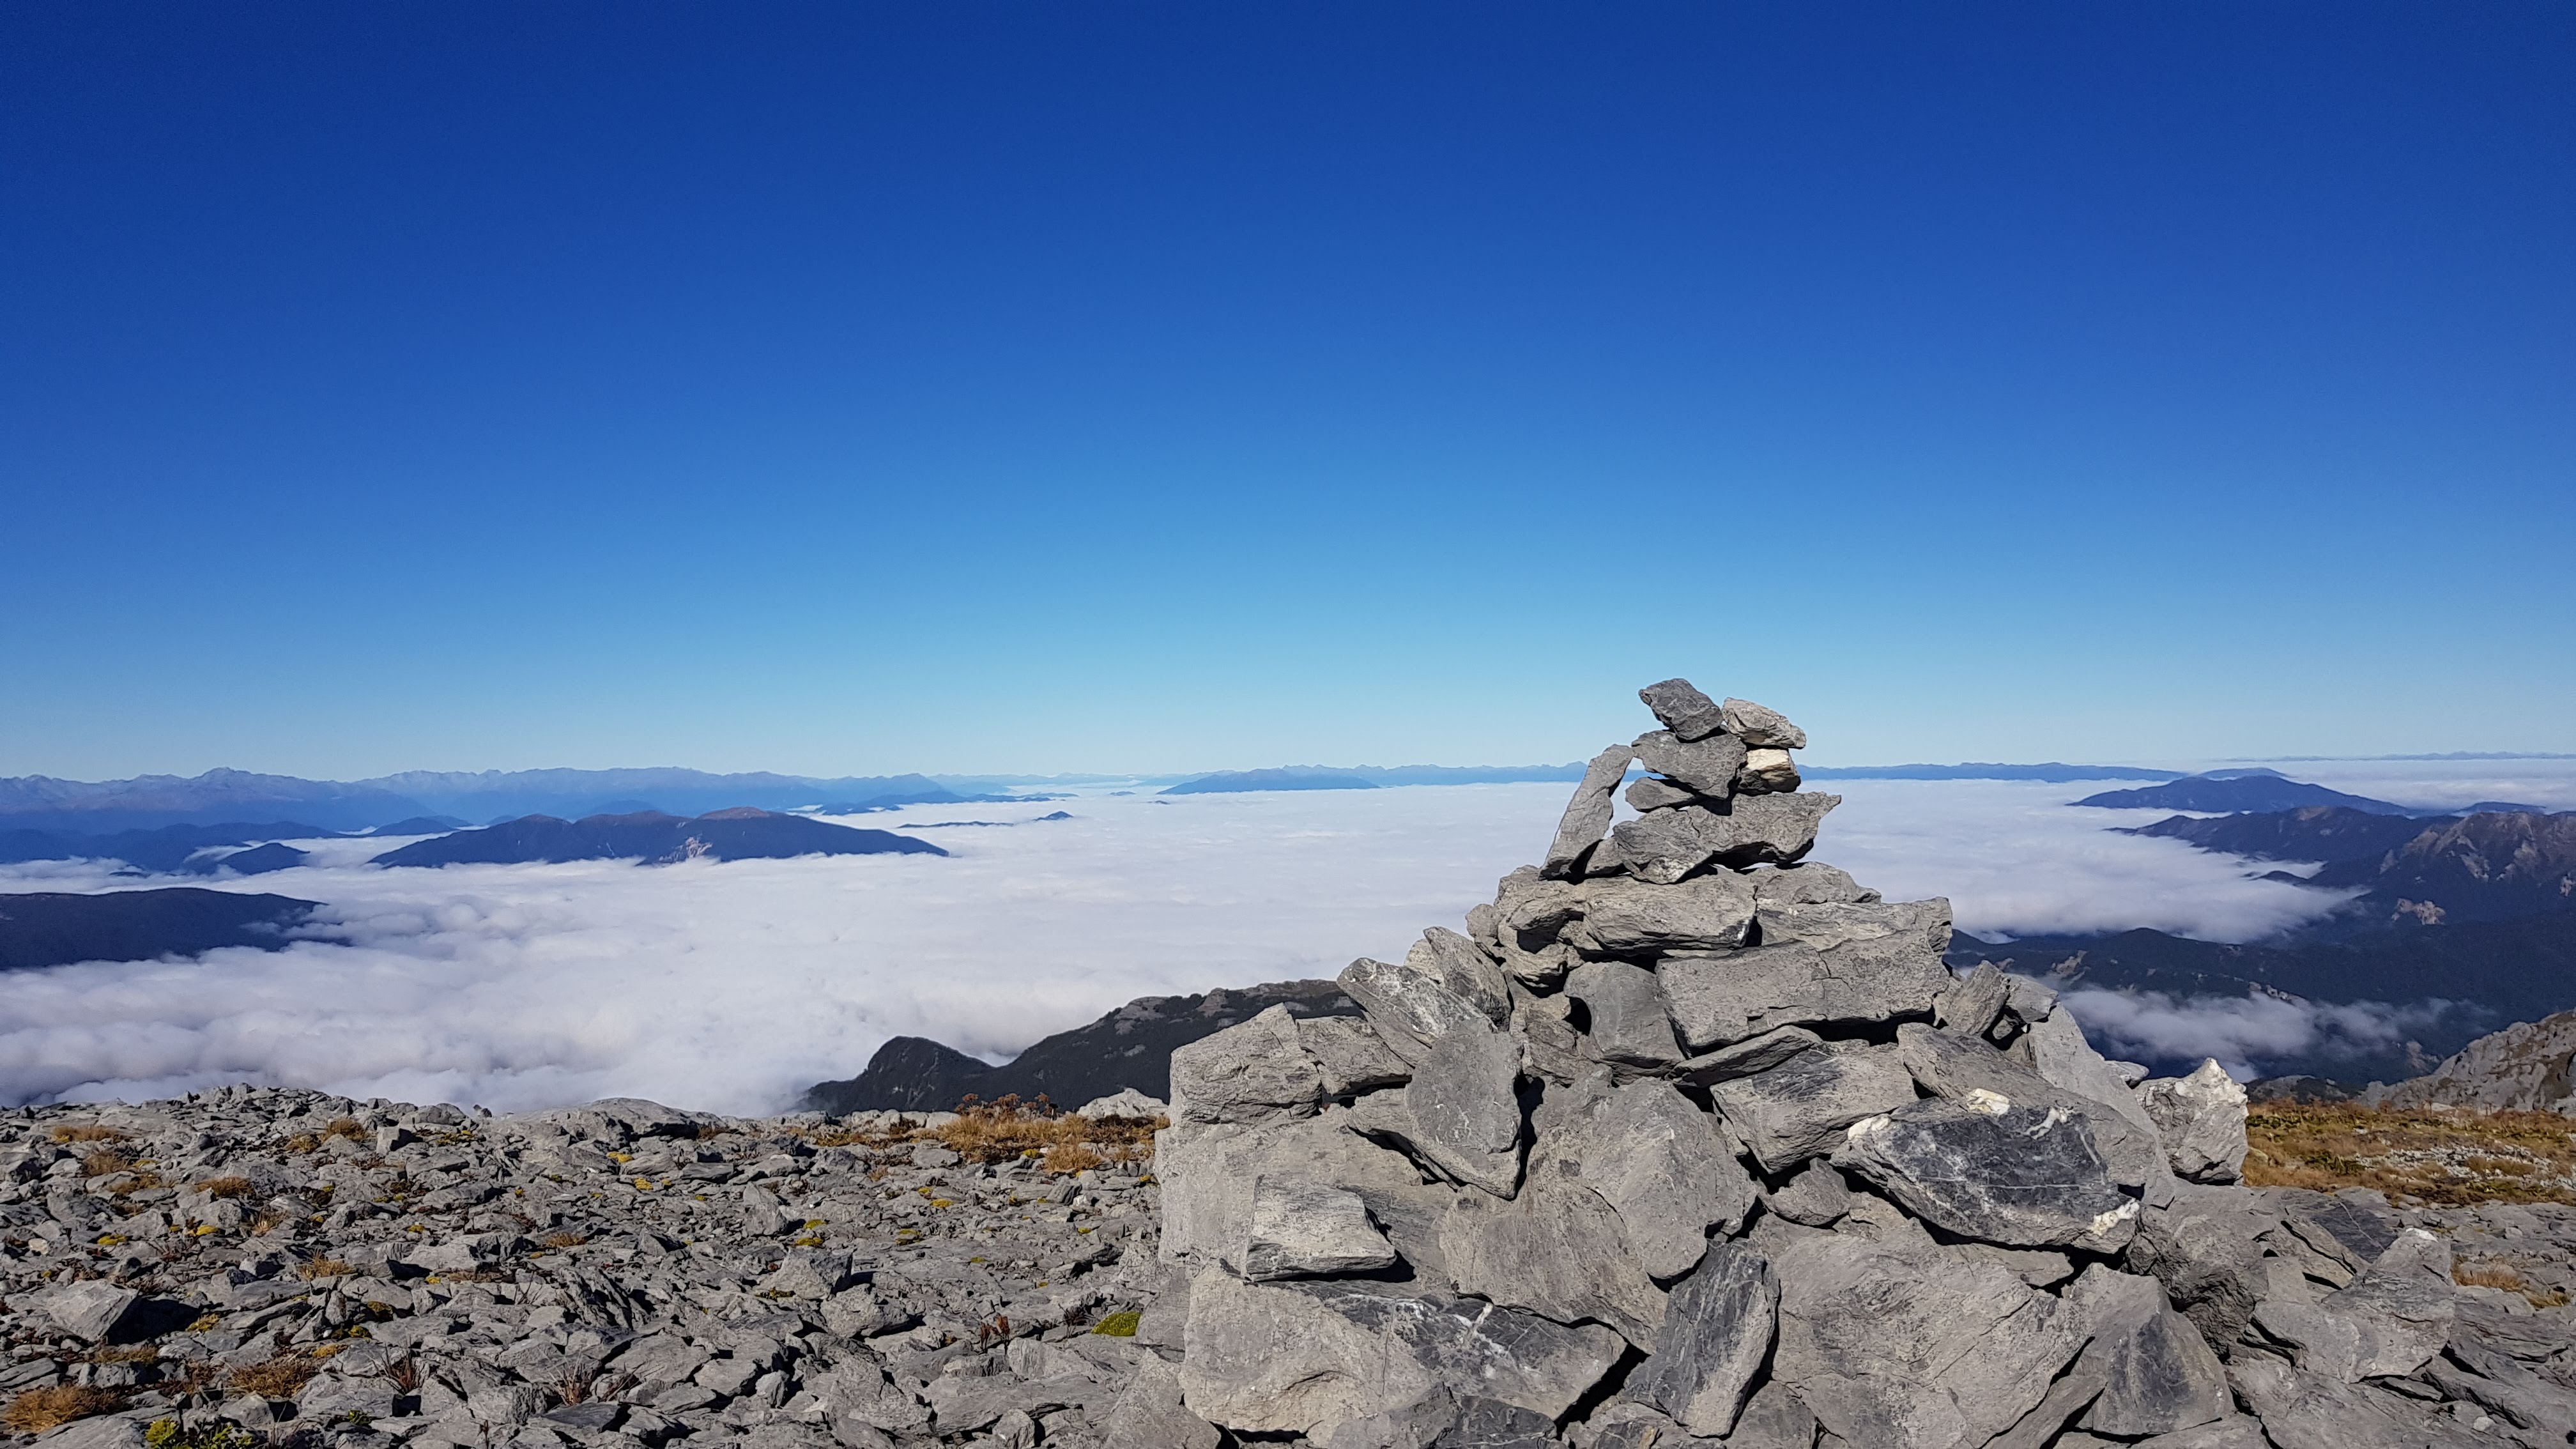 Cairn on the summit of Mount Owen